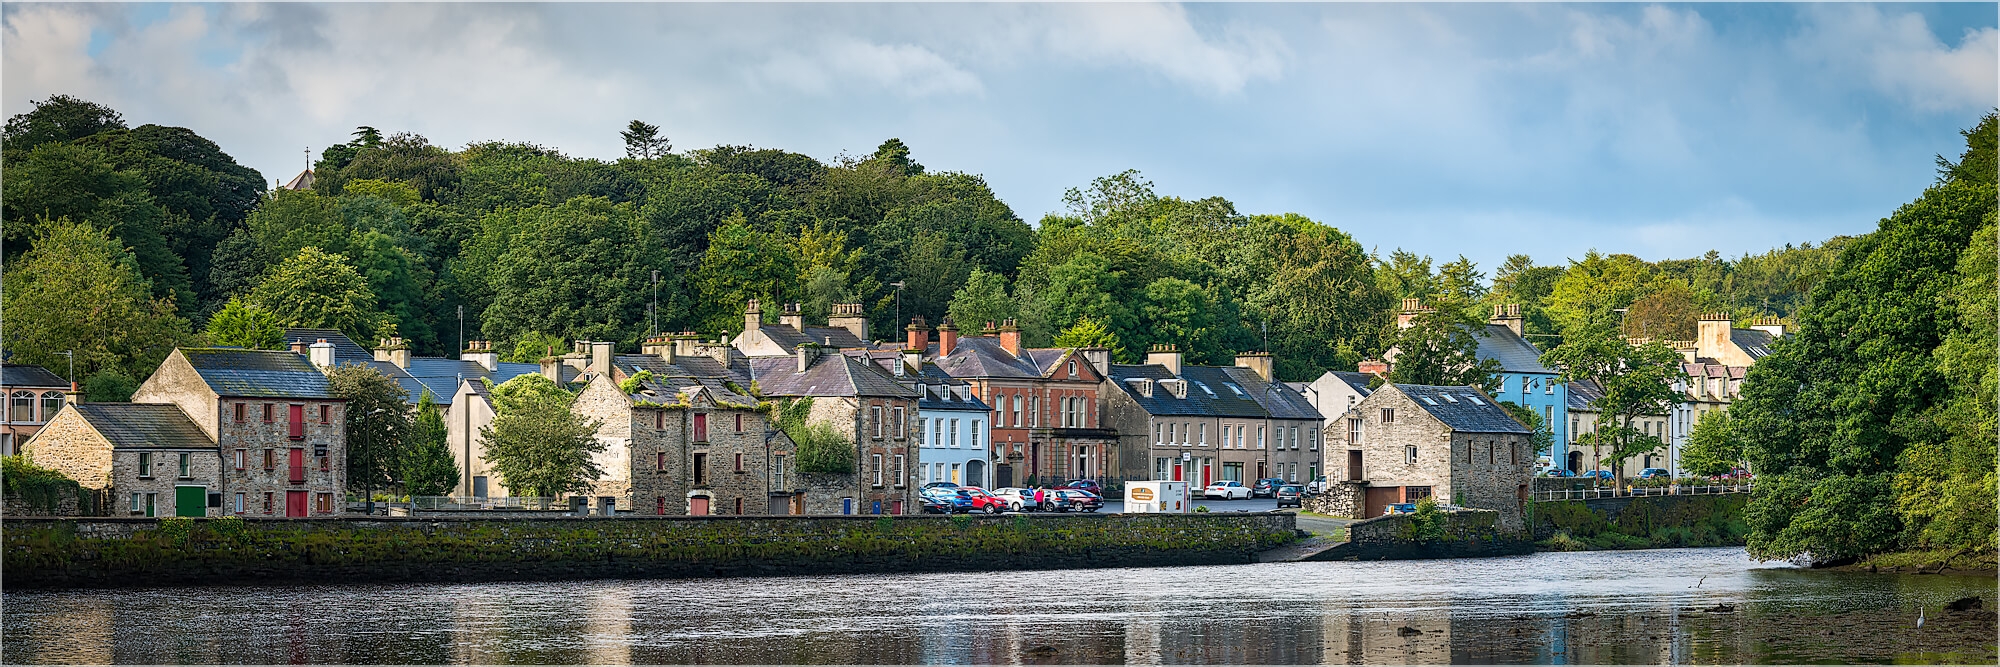 Panoramabild Häuserzeile in Irland